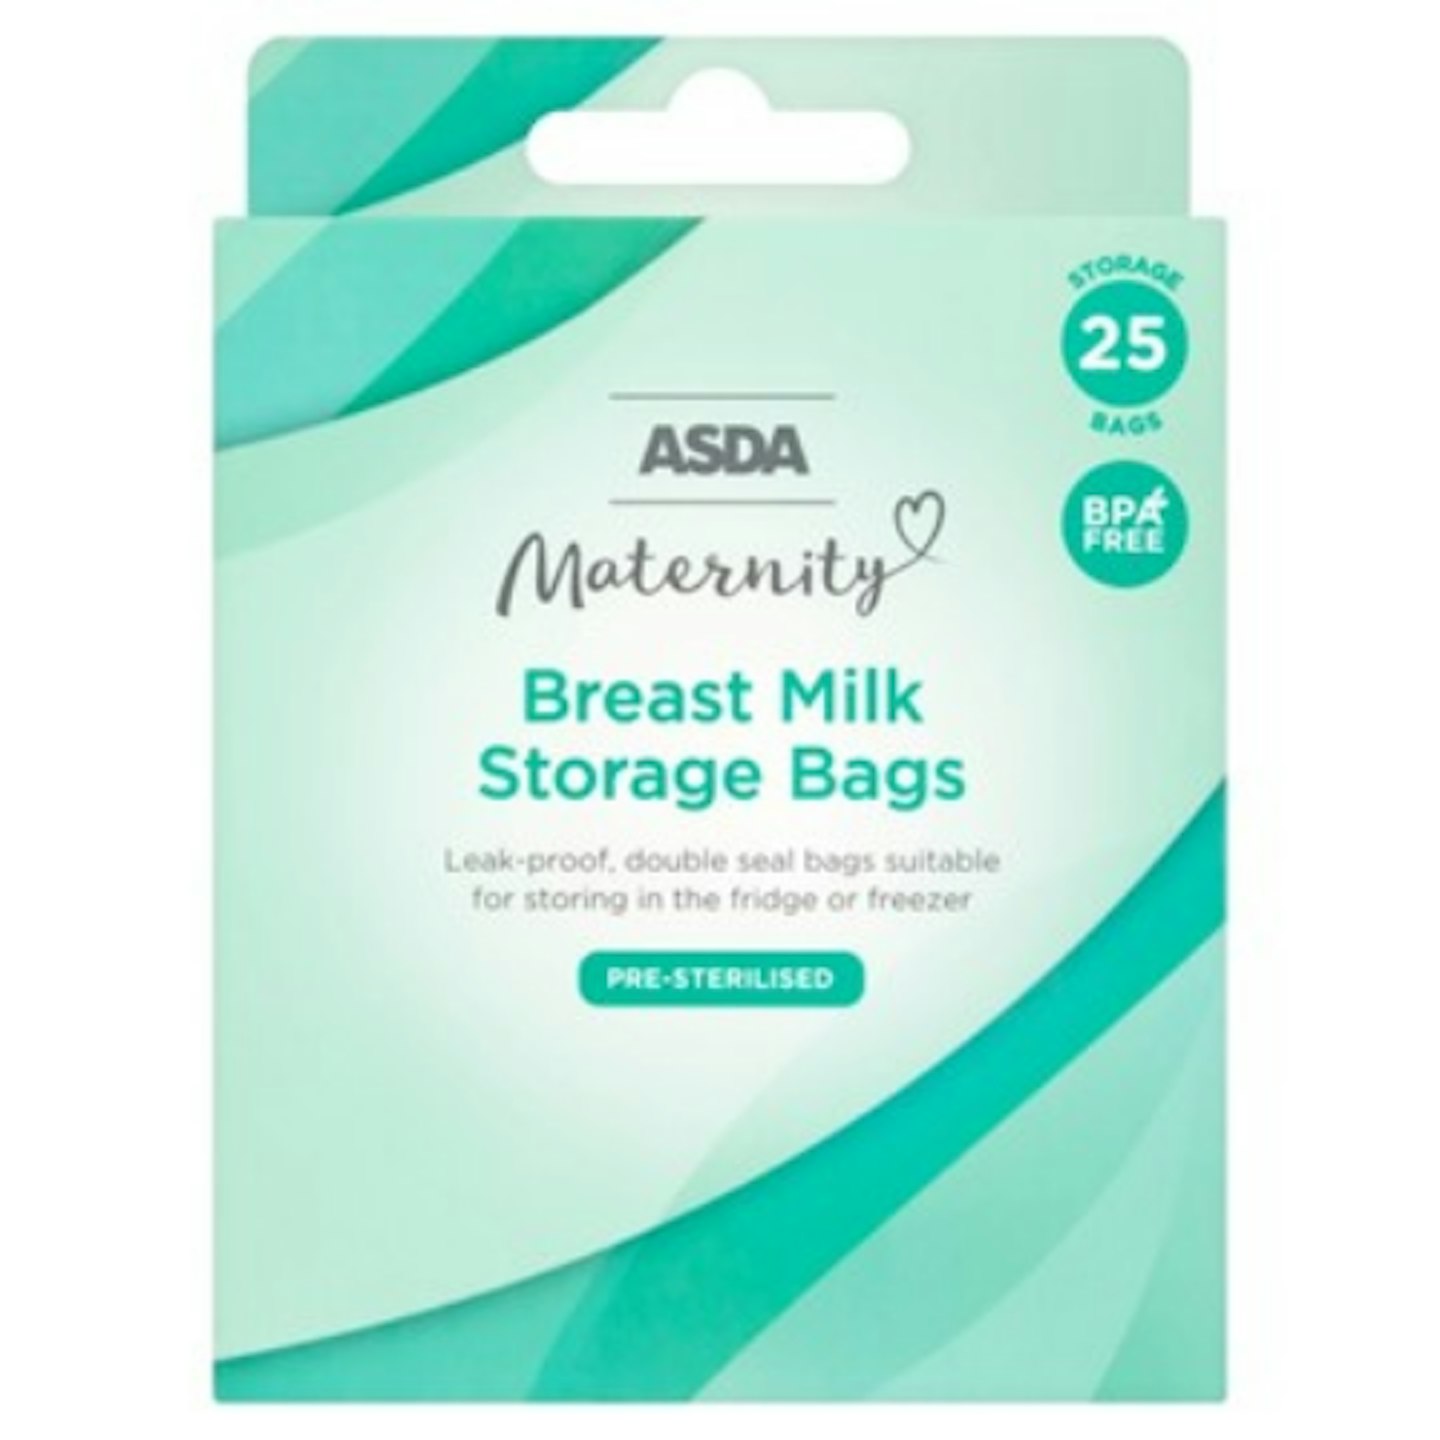 ASDA Maternity 25 Breast Milk Storage Bags